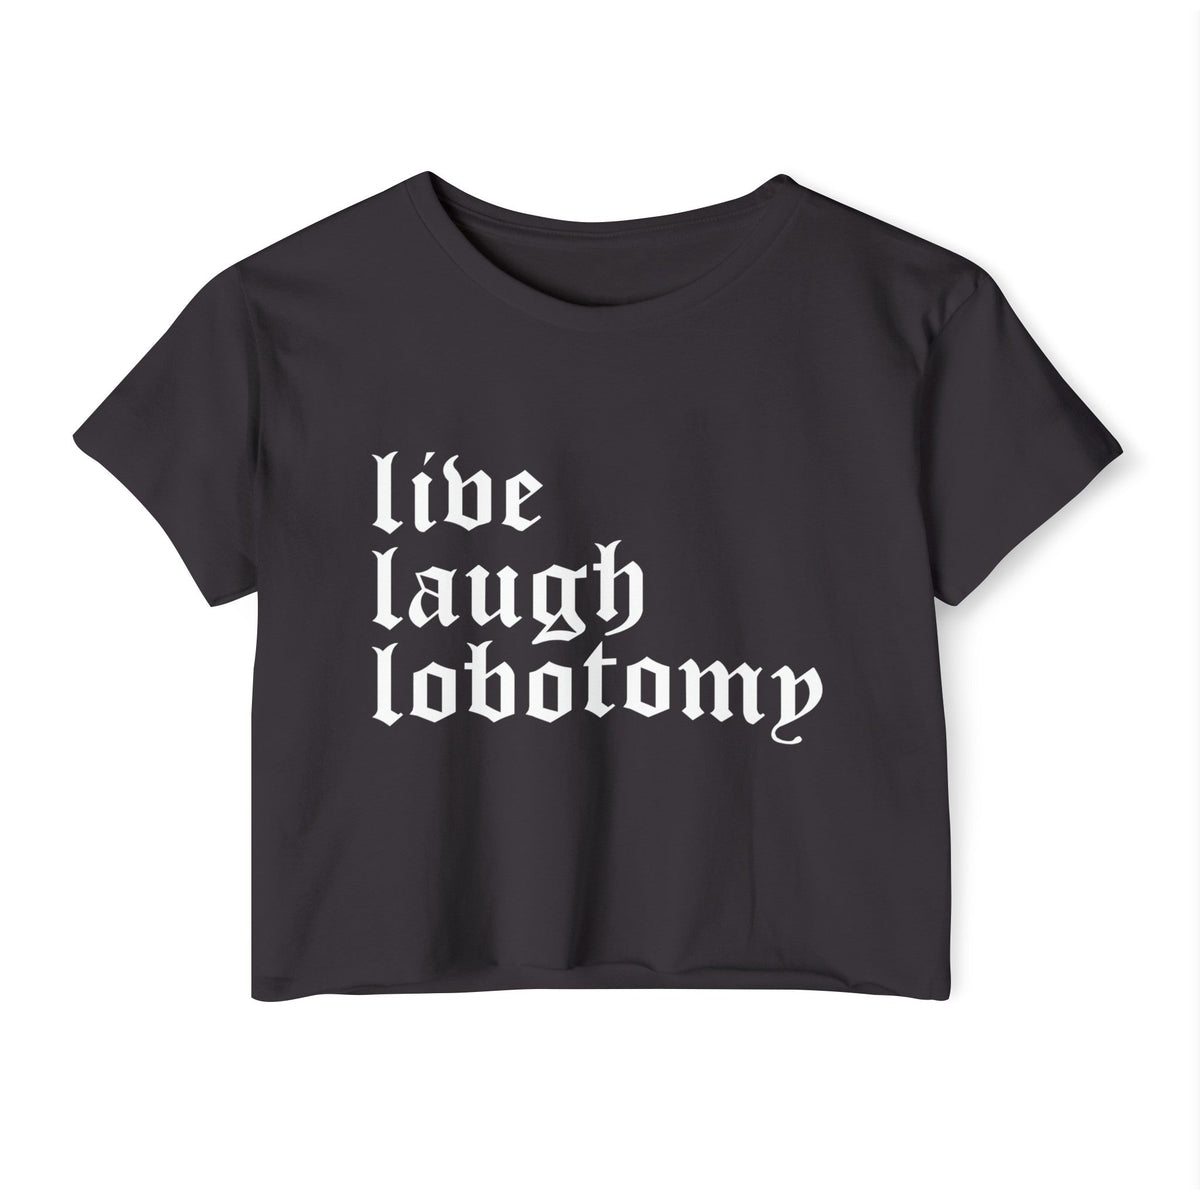 Live Laugh Lobotomy Women's Lightweight Crop Top - Goth Cloth Co.T - Shirt19790829074088418386